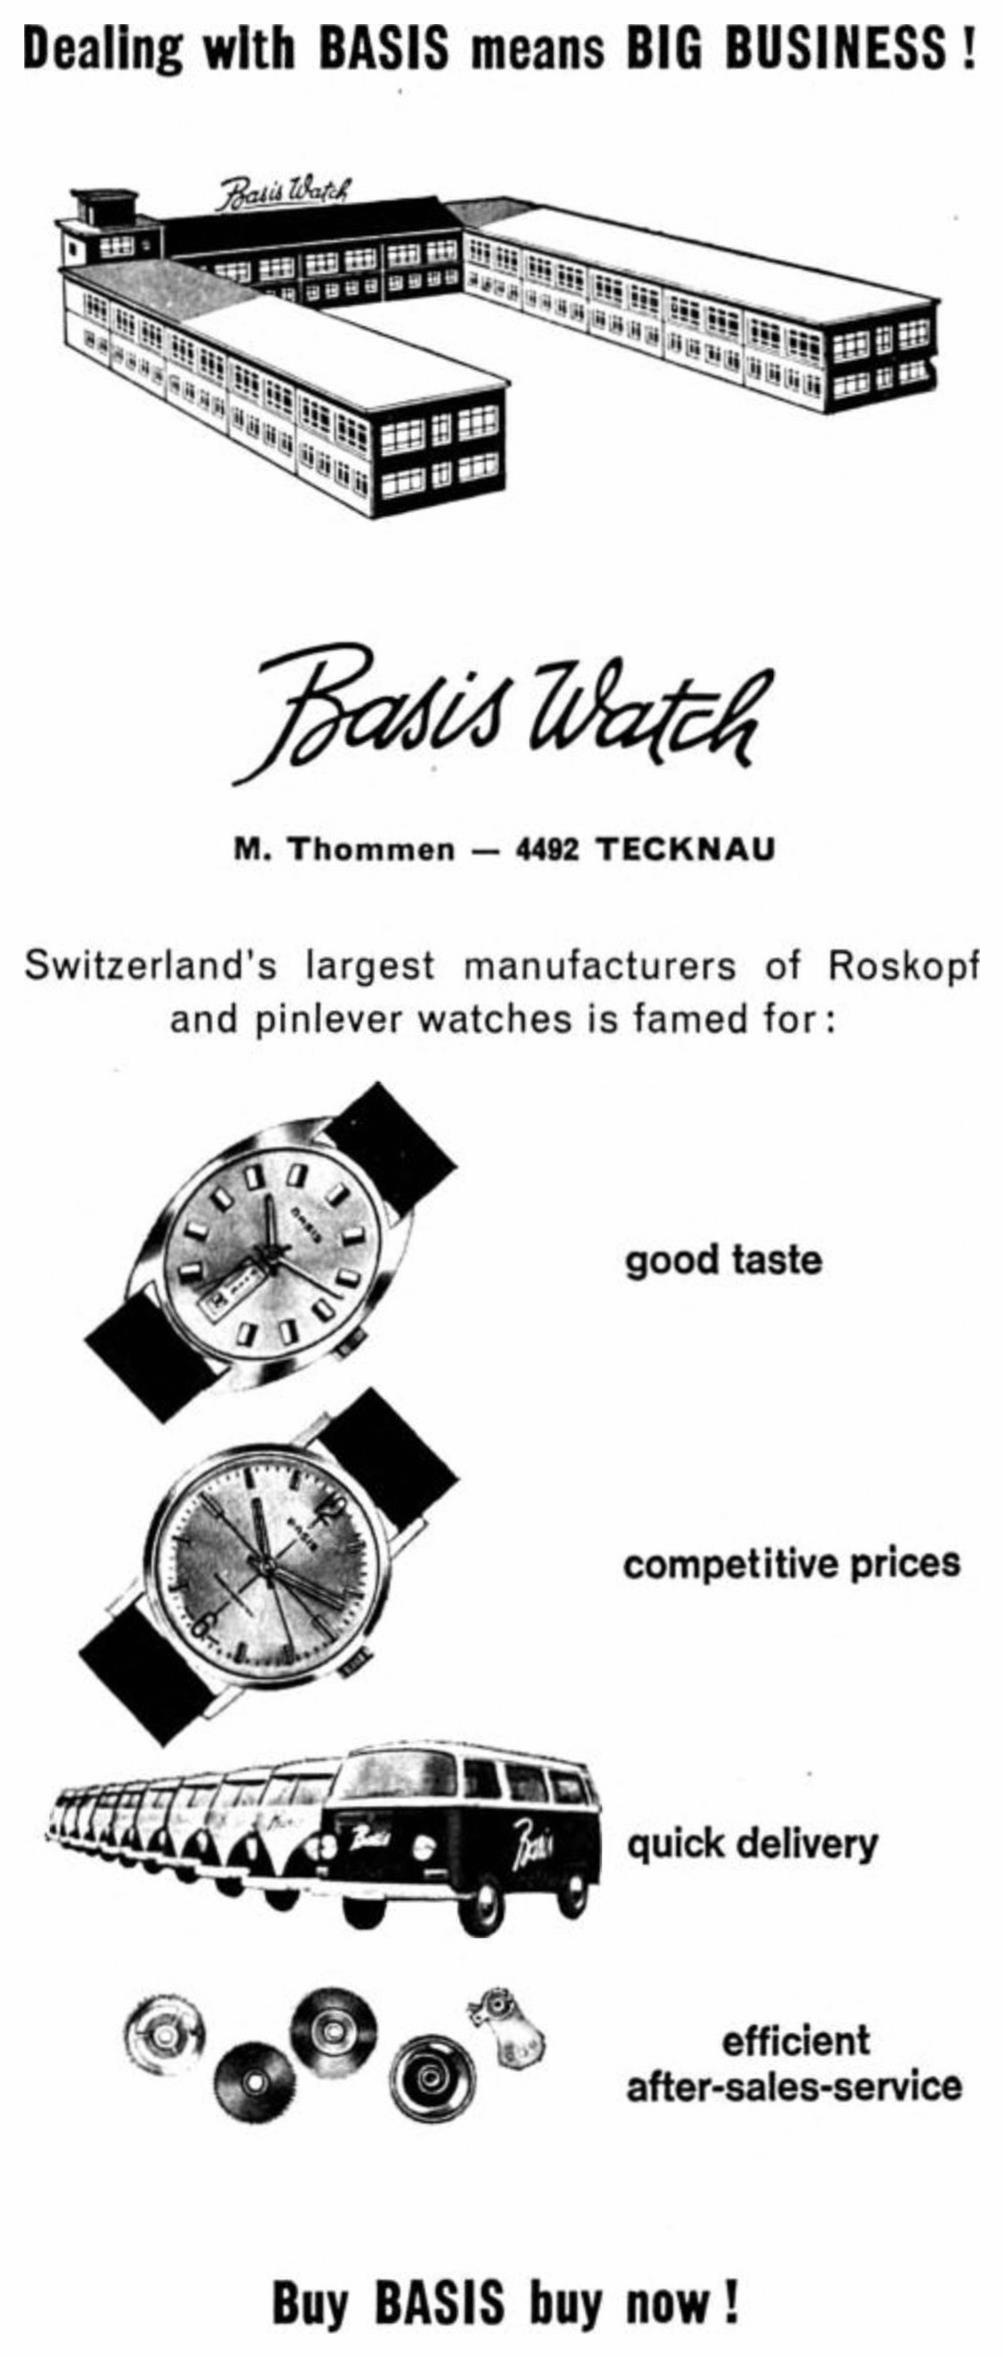 Basis Watch 1970 112.jpg